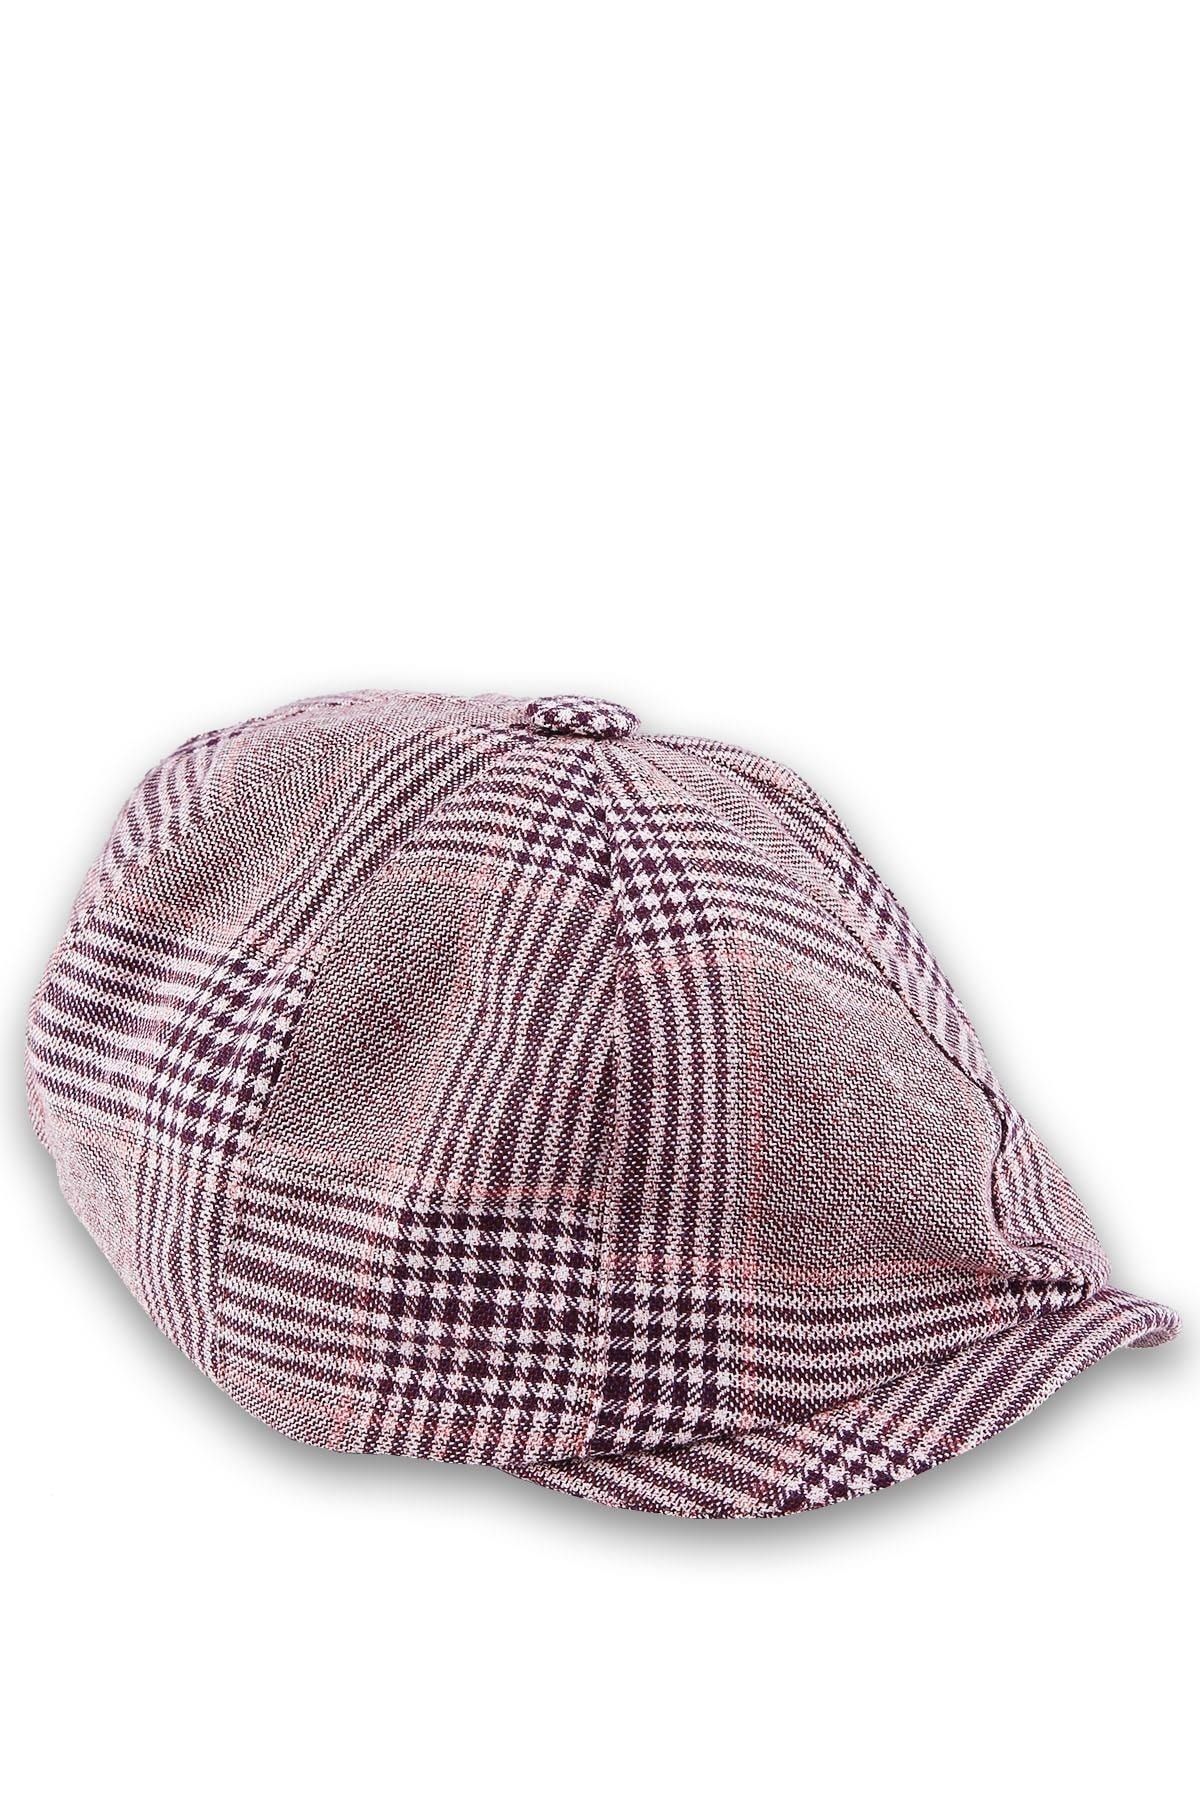 Kravatkolik La Pescara Bordo - Beyaz Yün Erkek Kasket Şapka Kst24